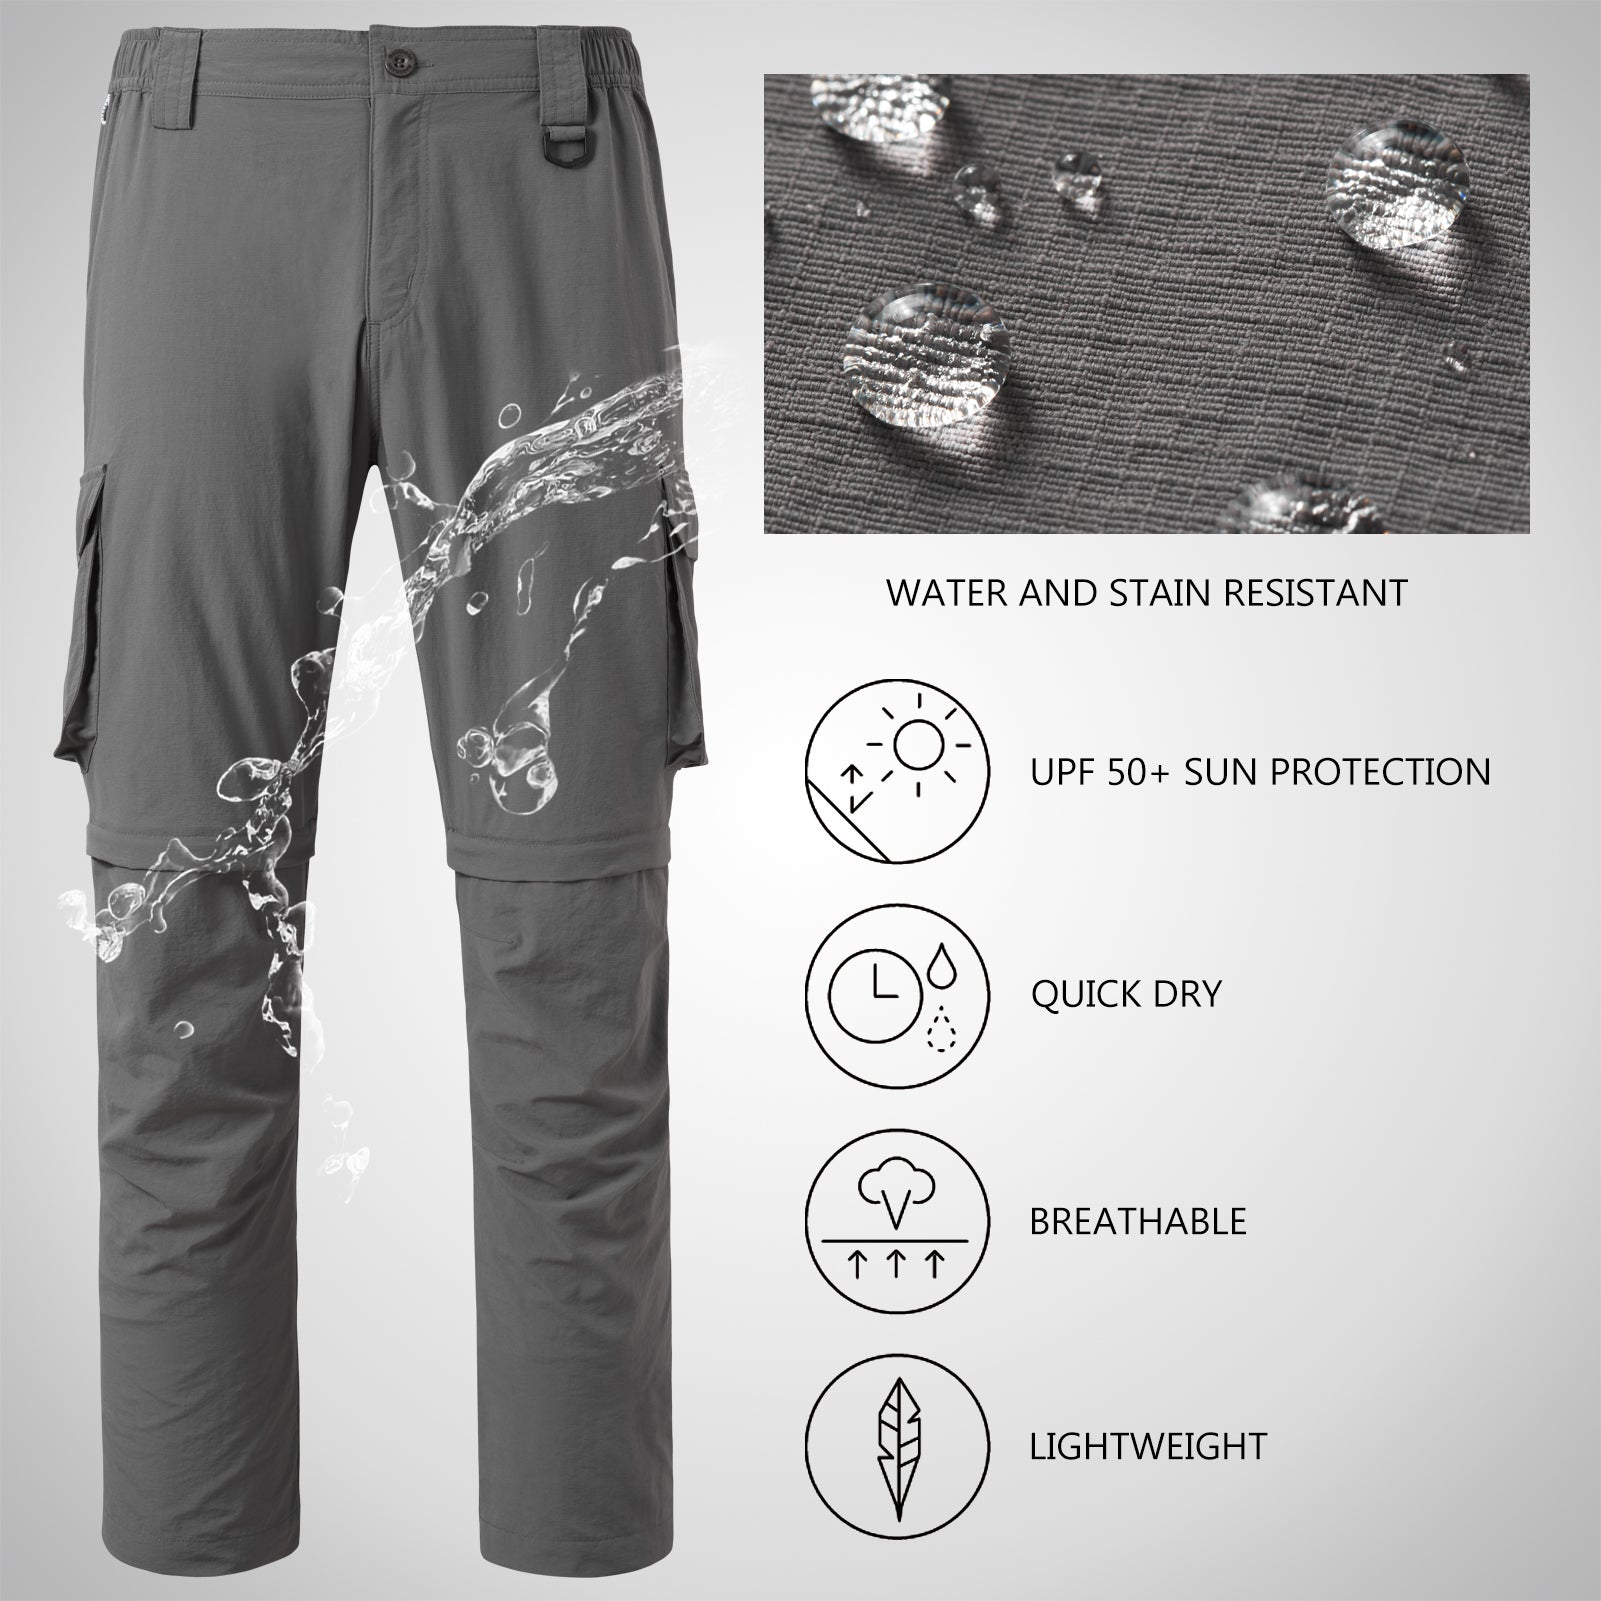 These $33 Gopune Hiking Pants Are Popular on Amazon